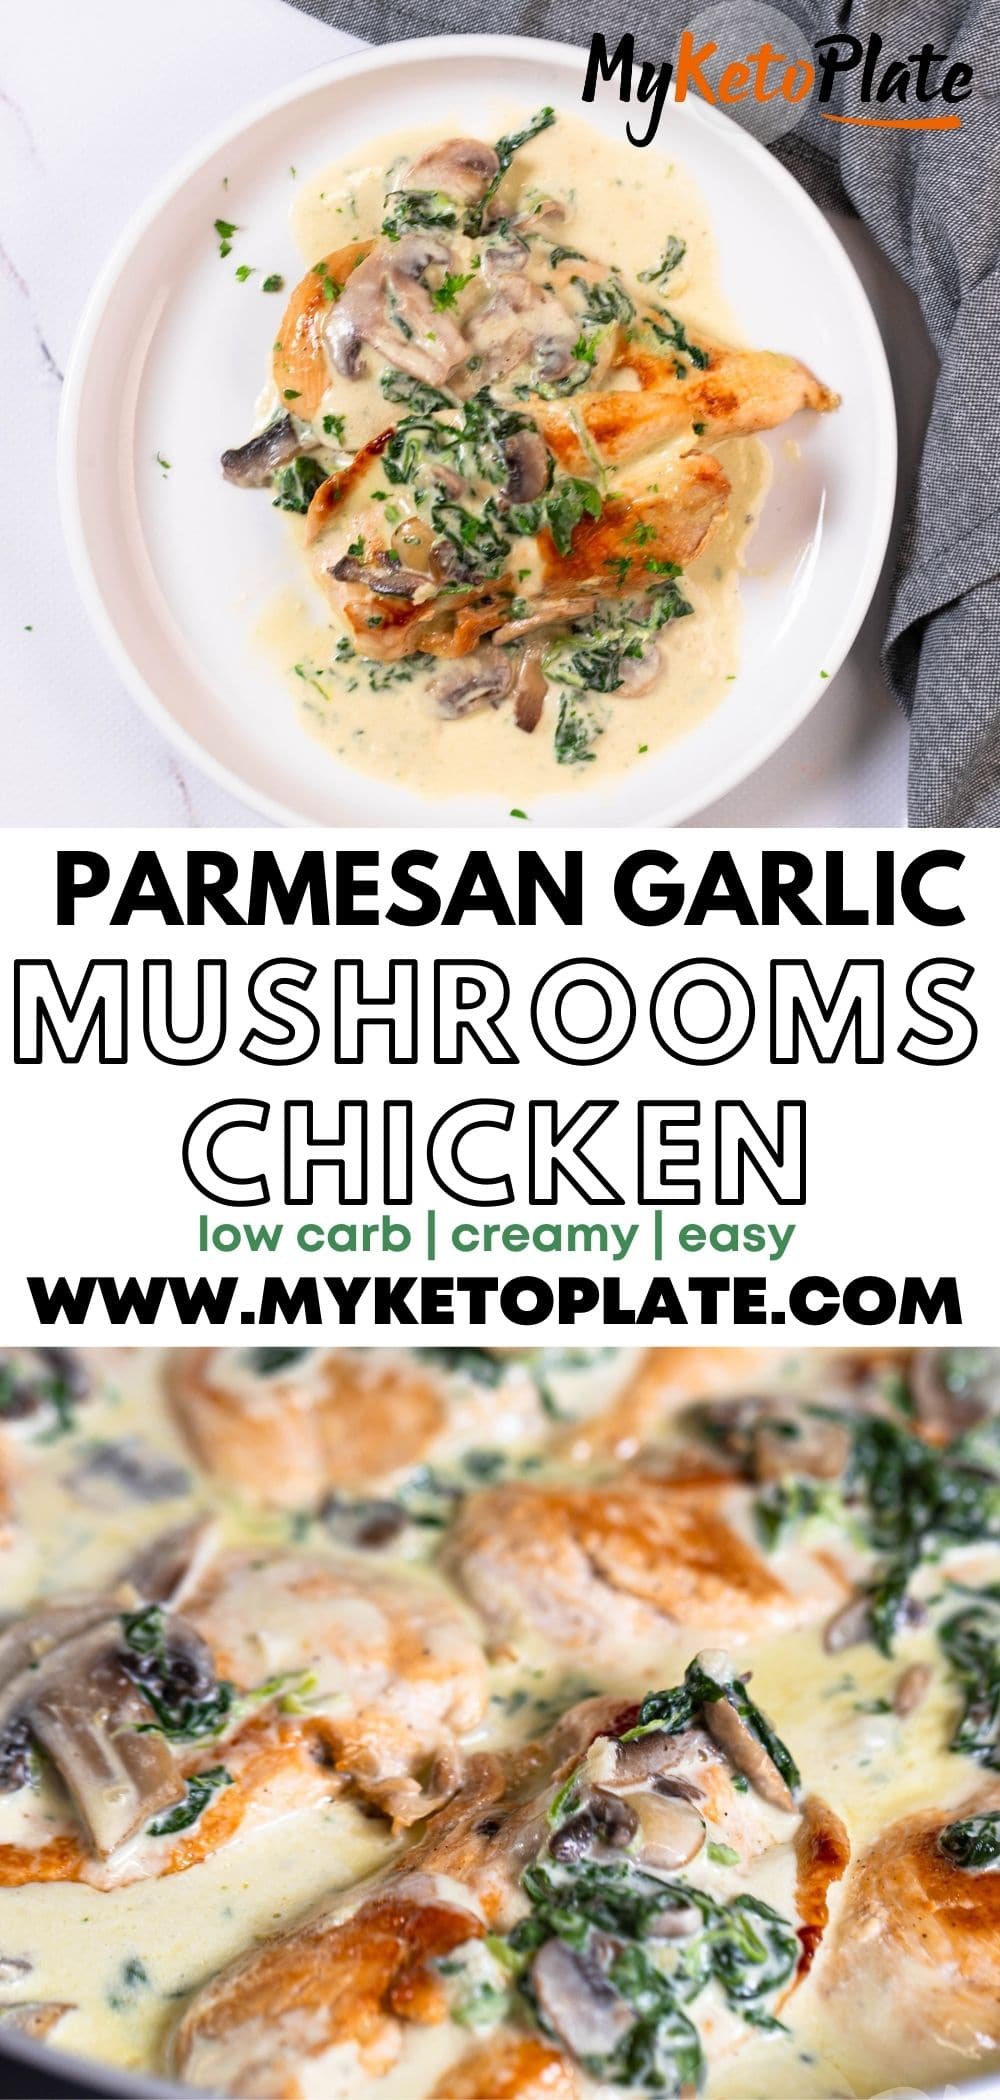 One-Pan Creamy Parmesan Garlic Mushroom Chicken - MyKetoPlate